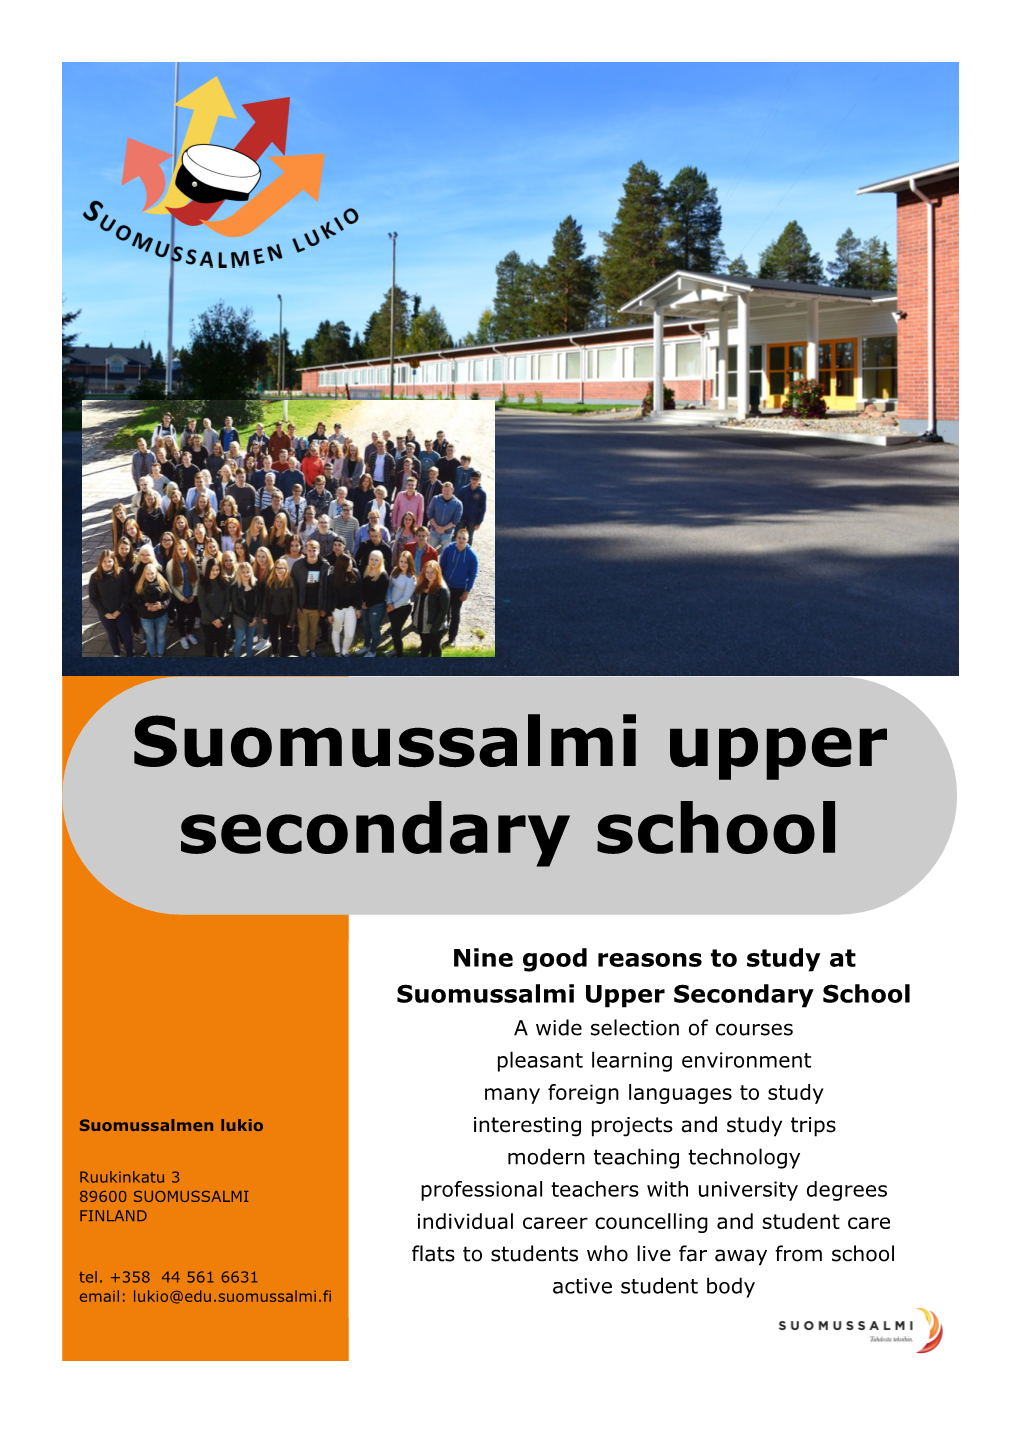 Suomussalmi Upper Secondary School